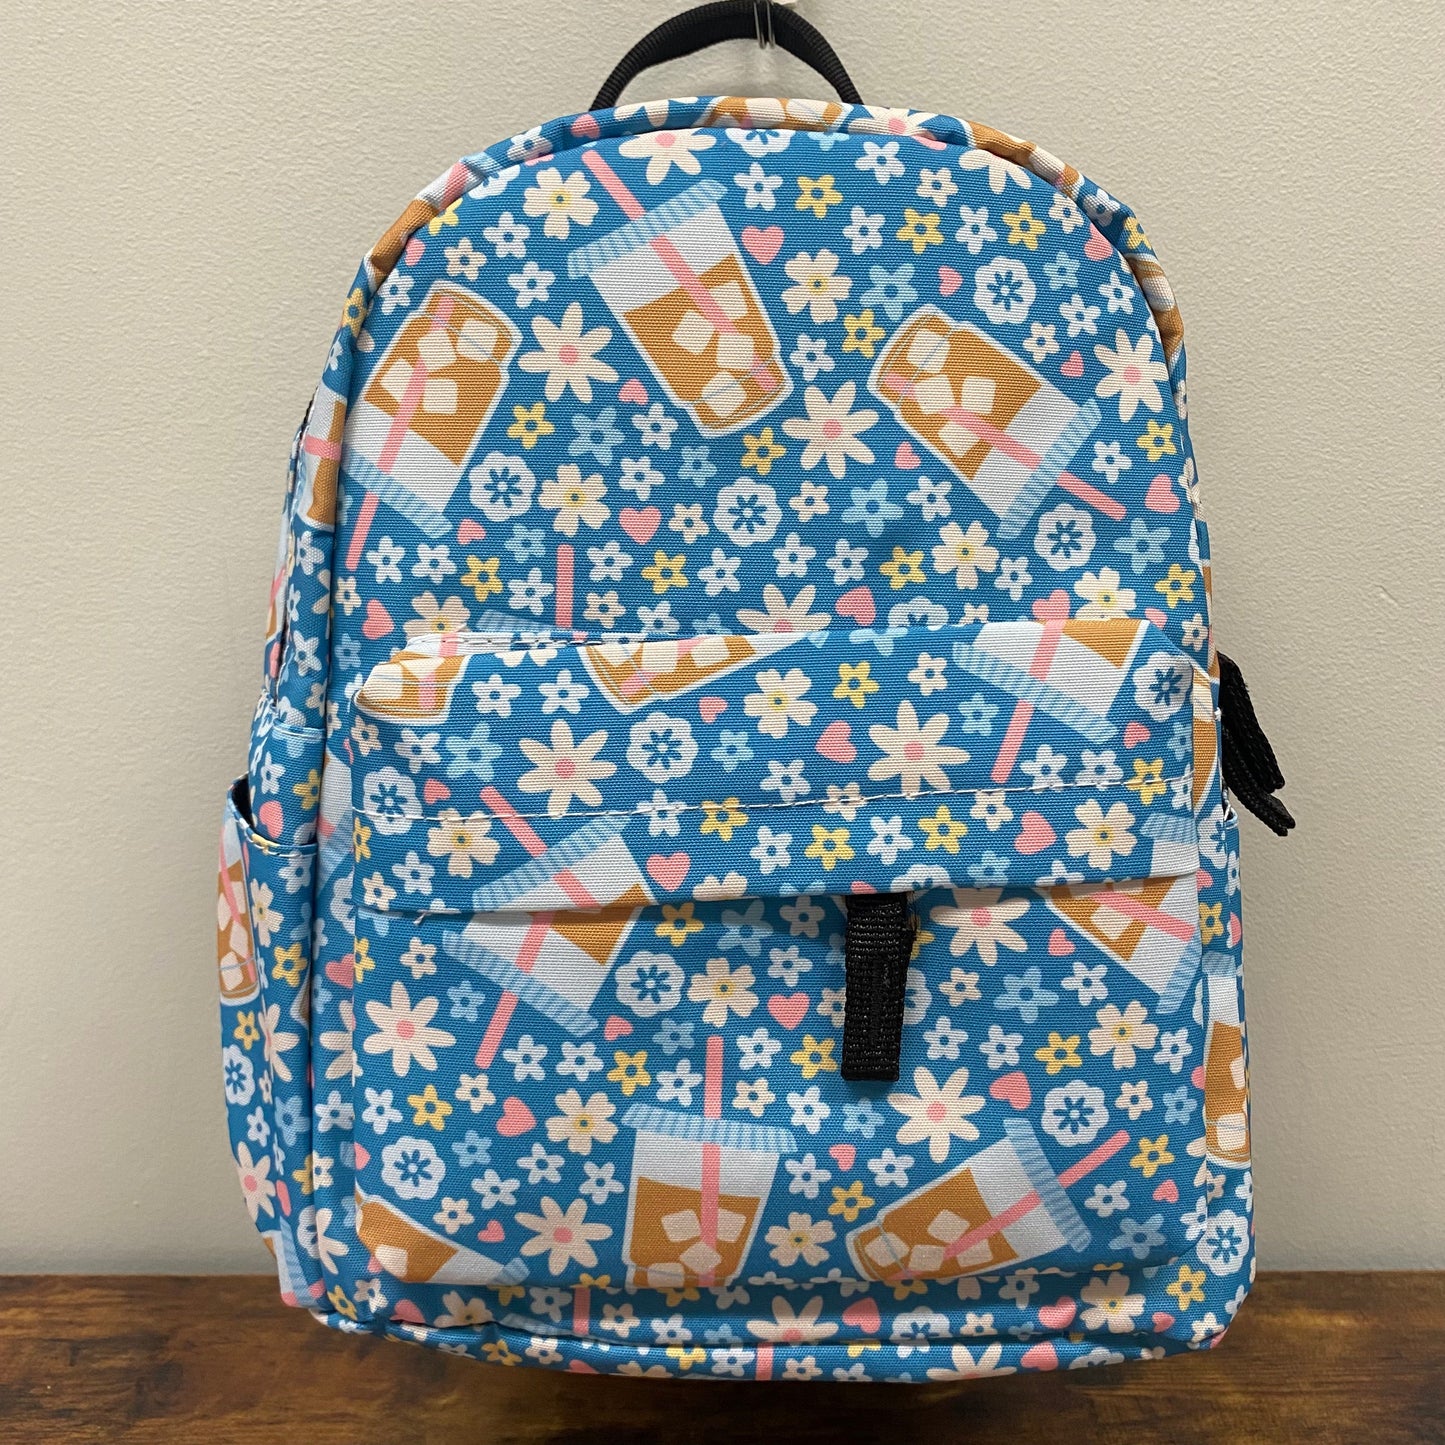 Mini Backpack - Coffee Blue Floral